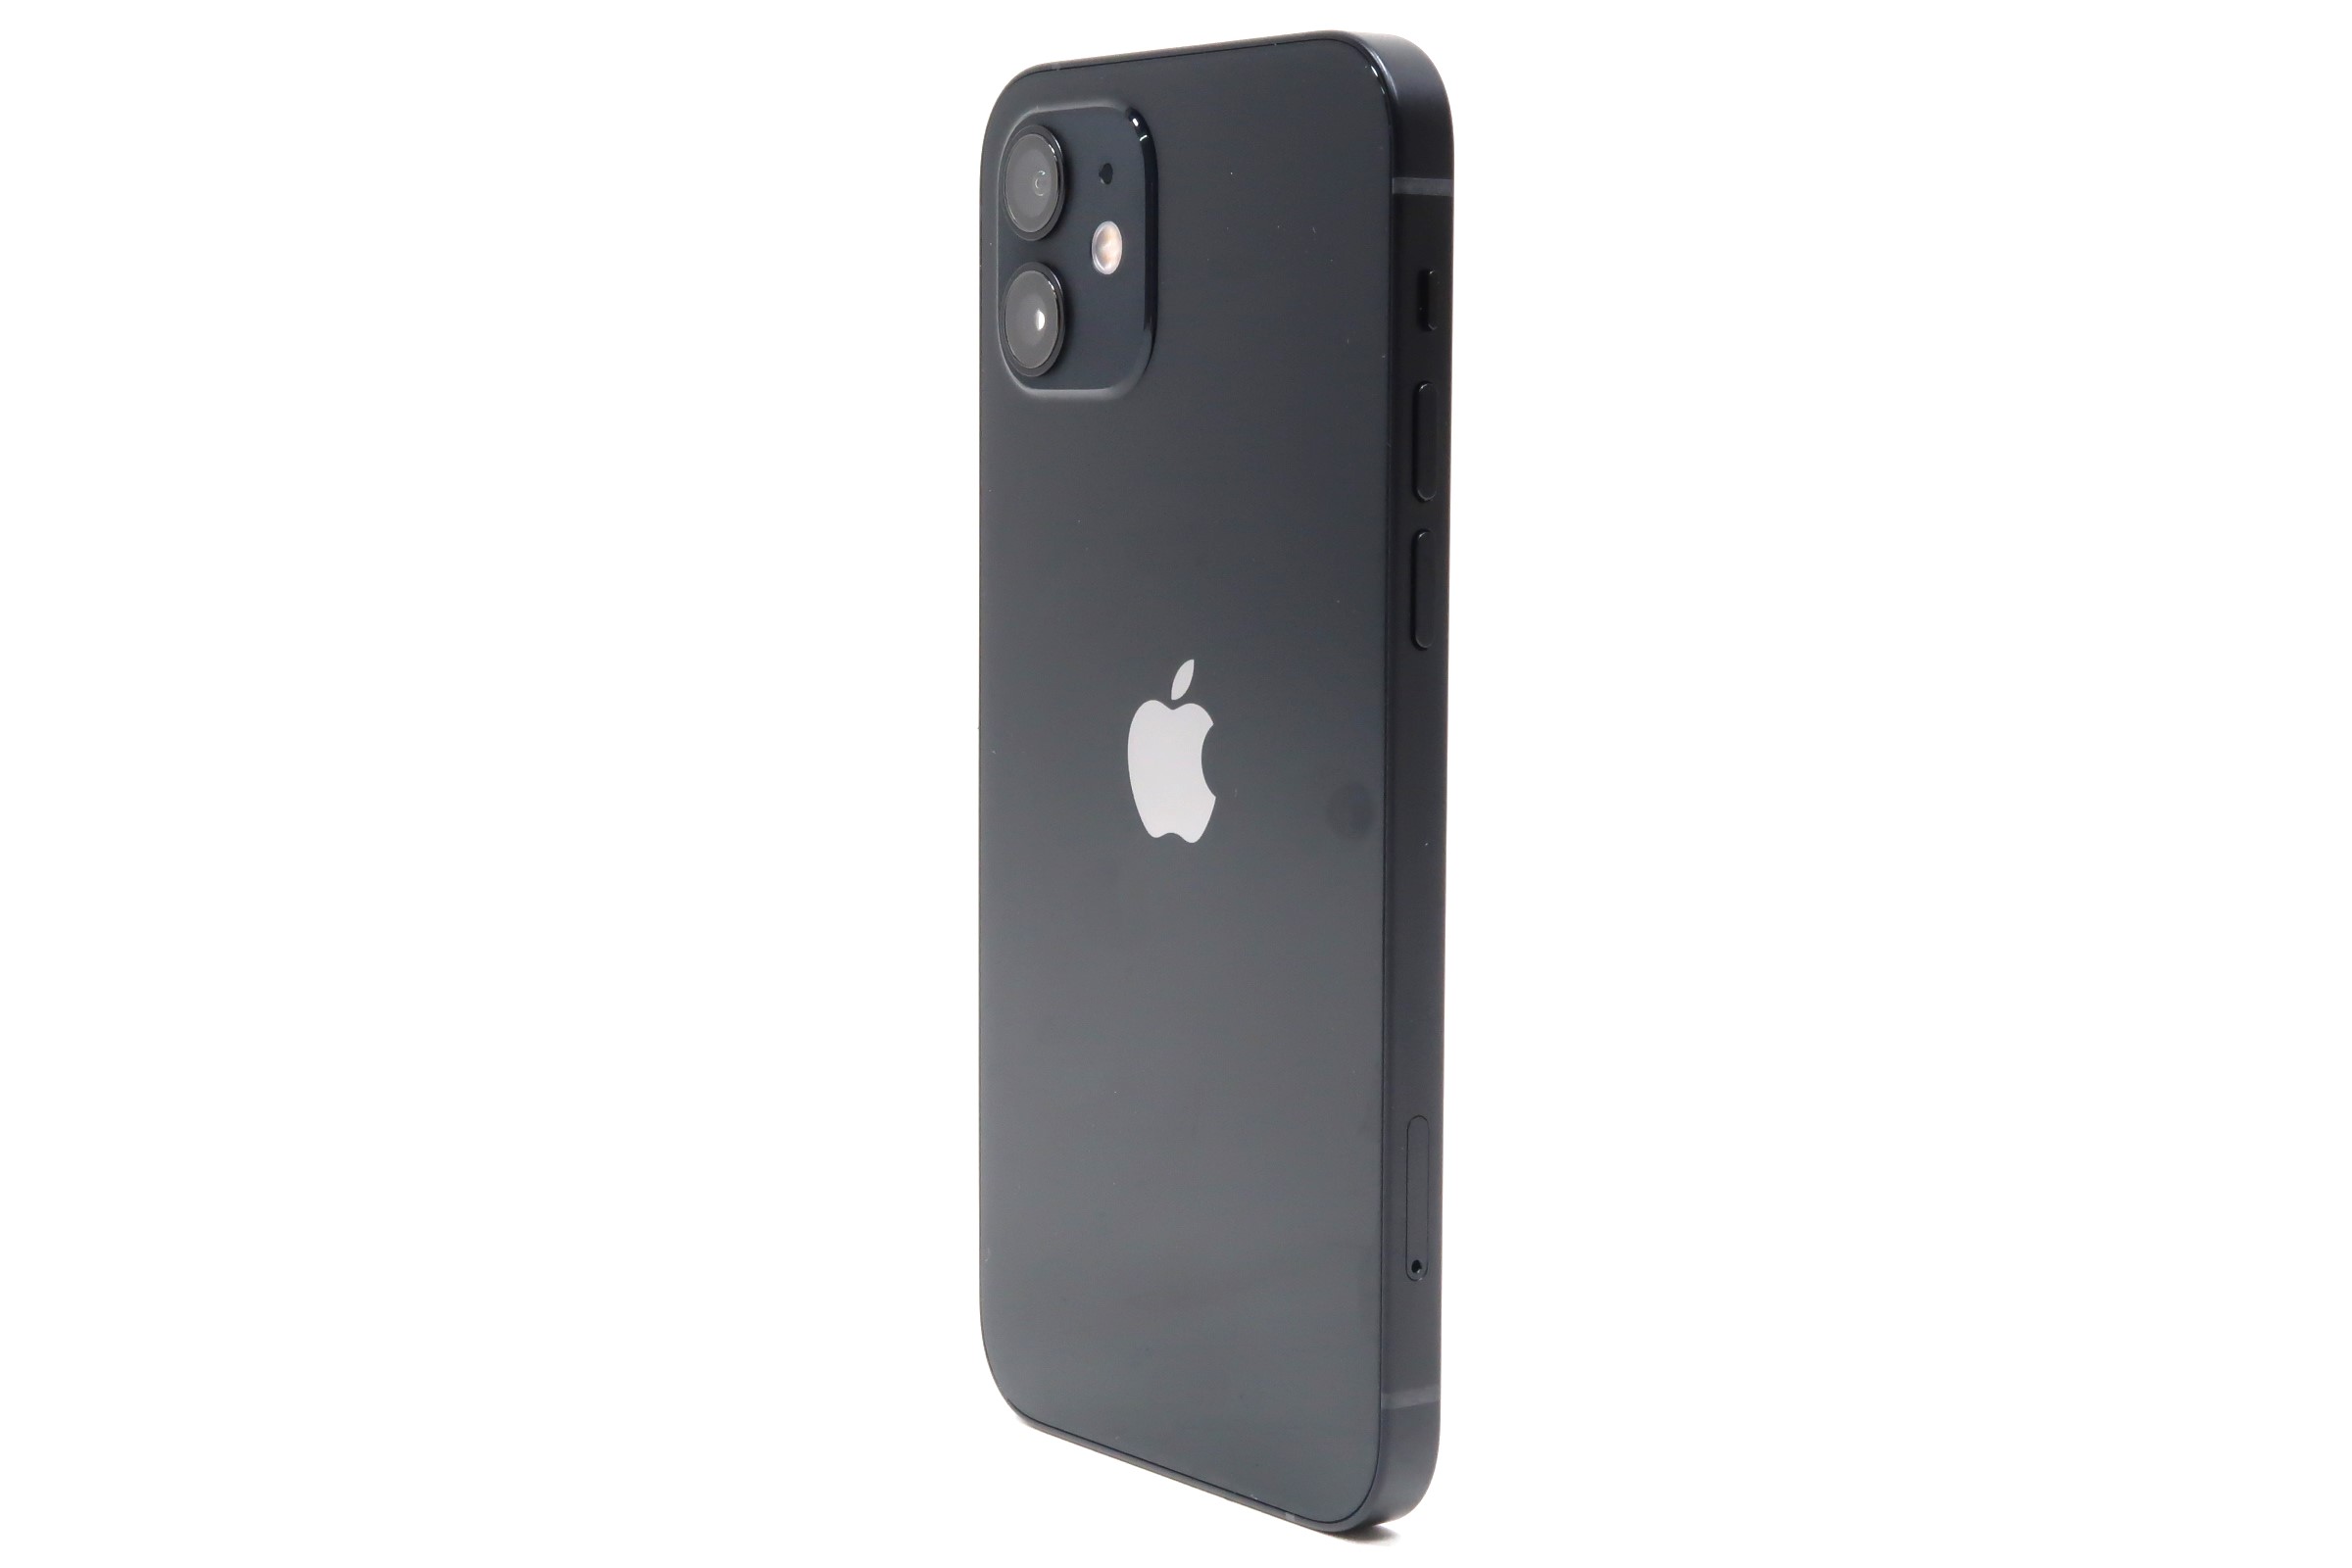 Apple iPhone 11 128GB Smartphone - Black - Unlocked - Refurbished